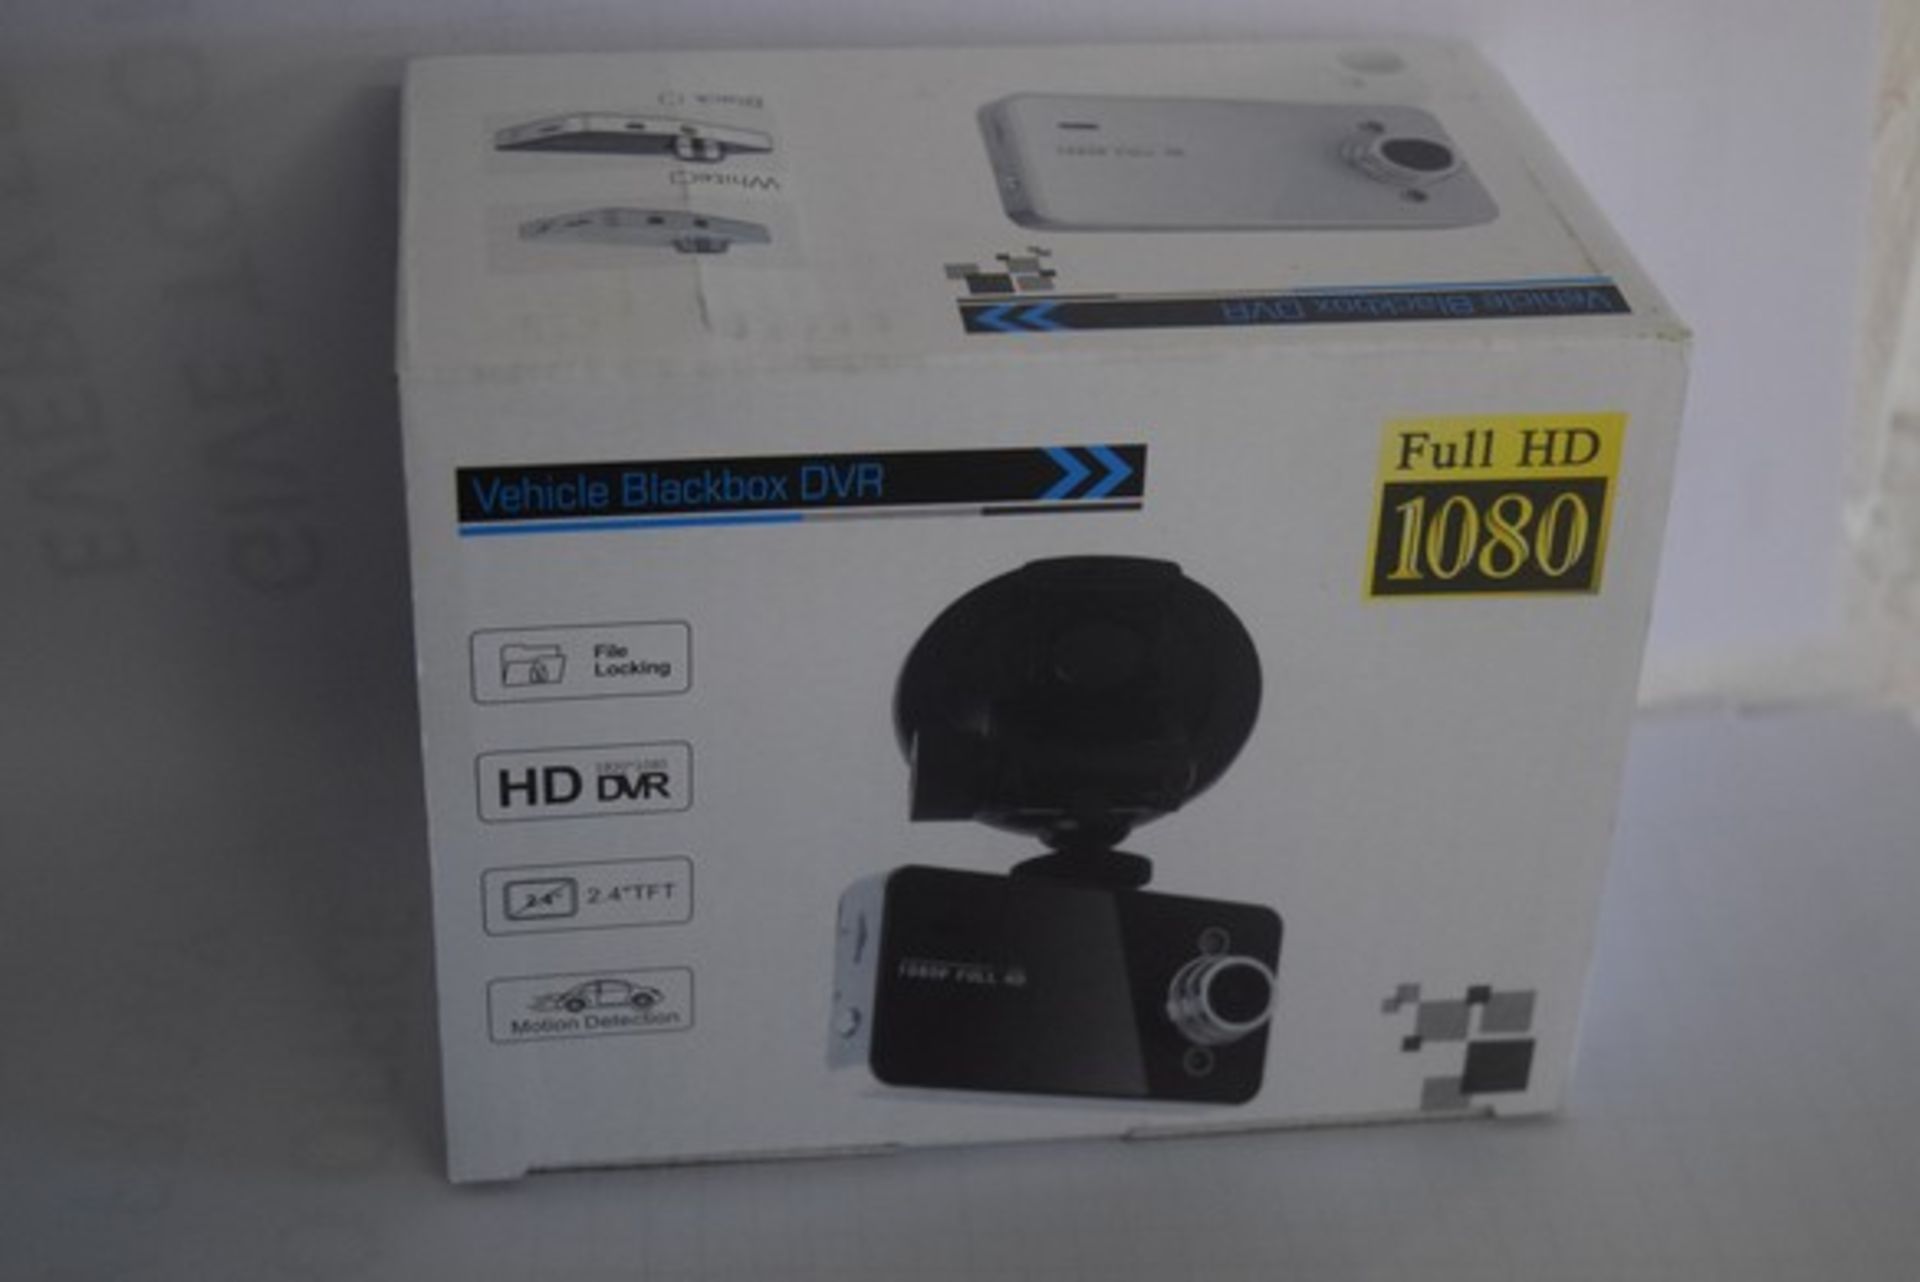 1 x BOXED BRAND NEW K6000 VEHICLE BLACK BOX FULL HD 1080 DVR VEHICLE CAMERA WITH 2.4" SCREEN, 140 A+